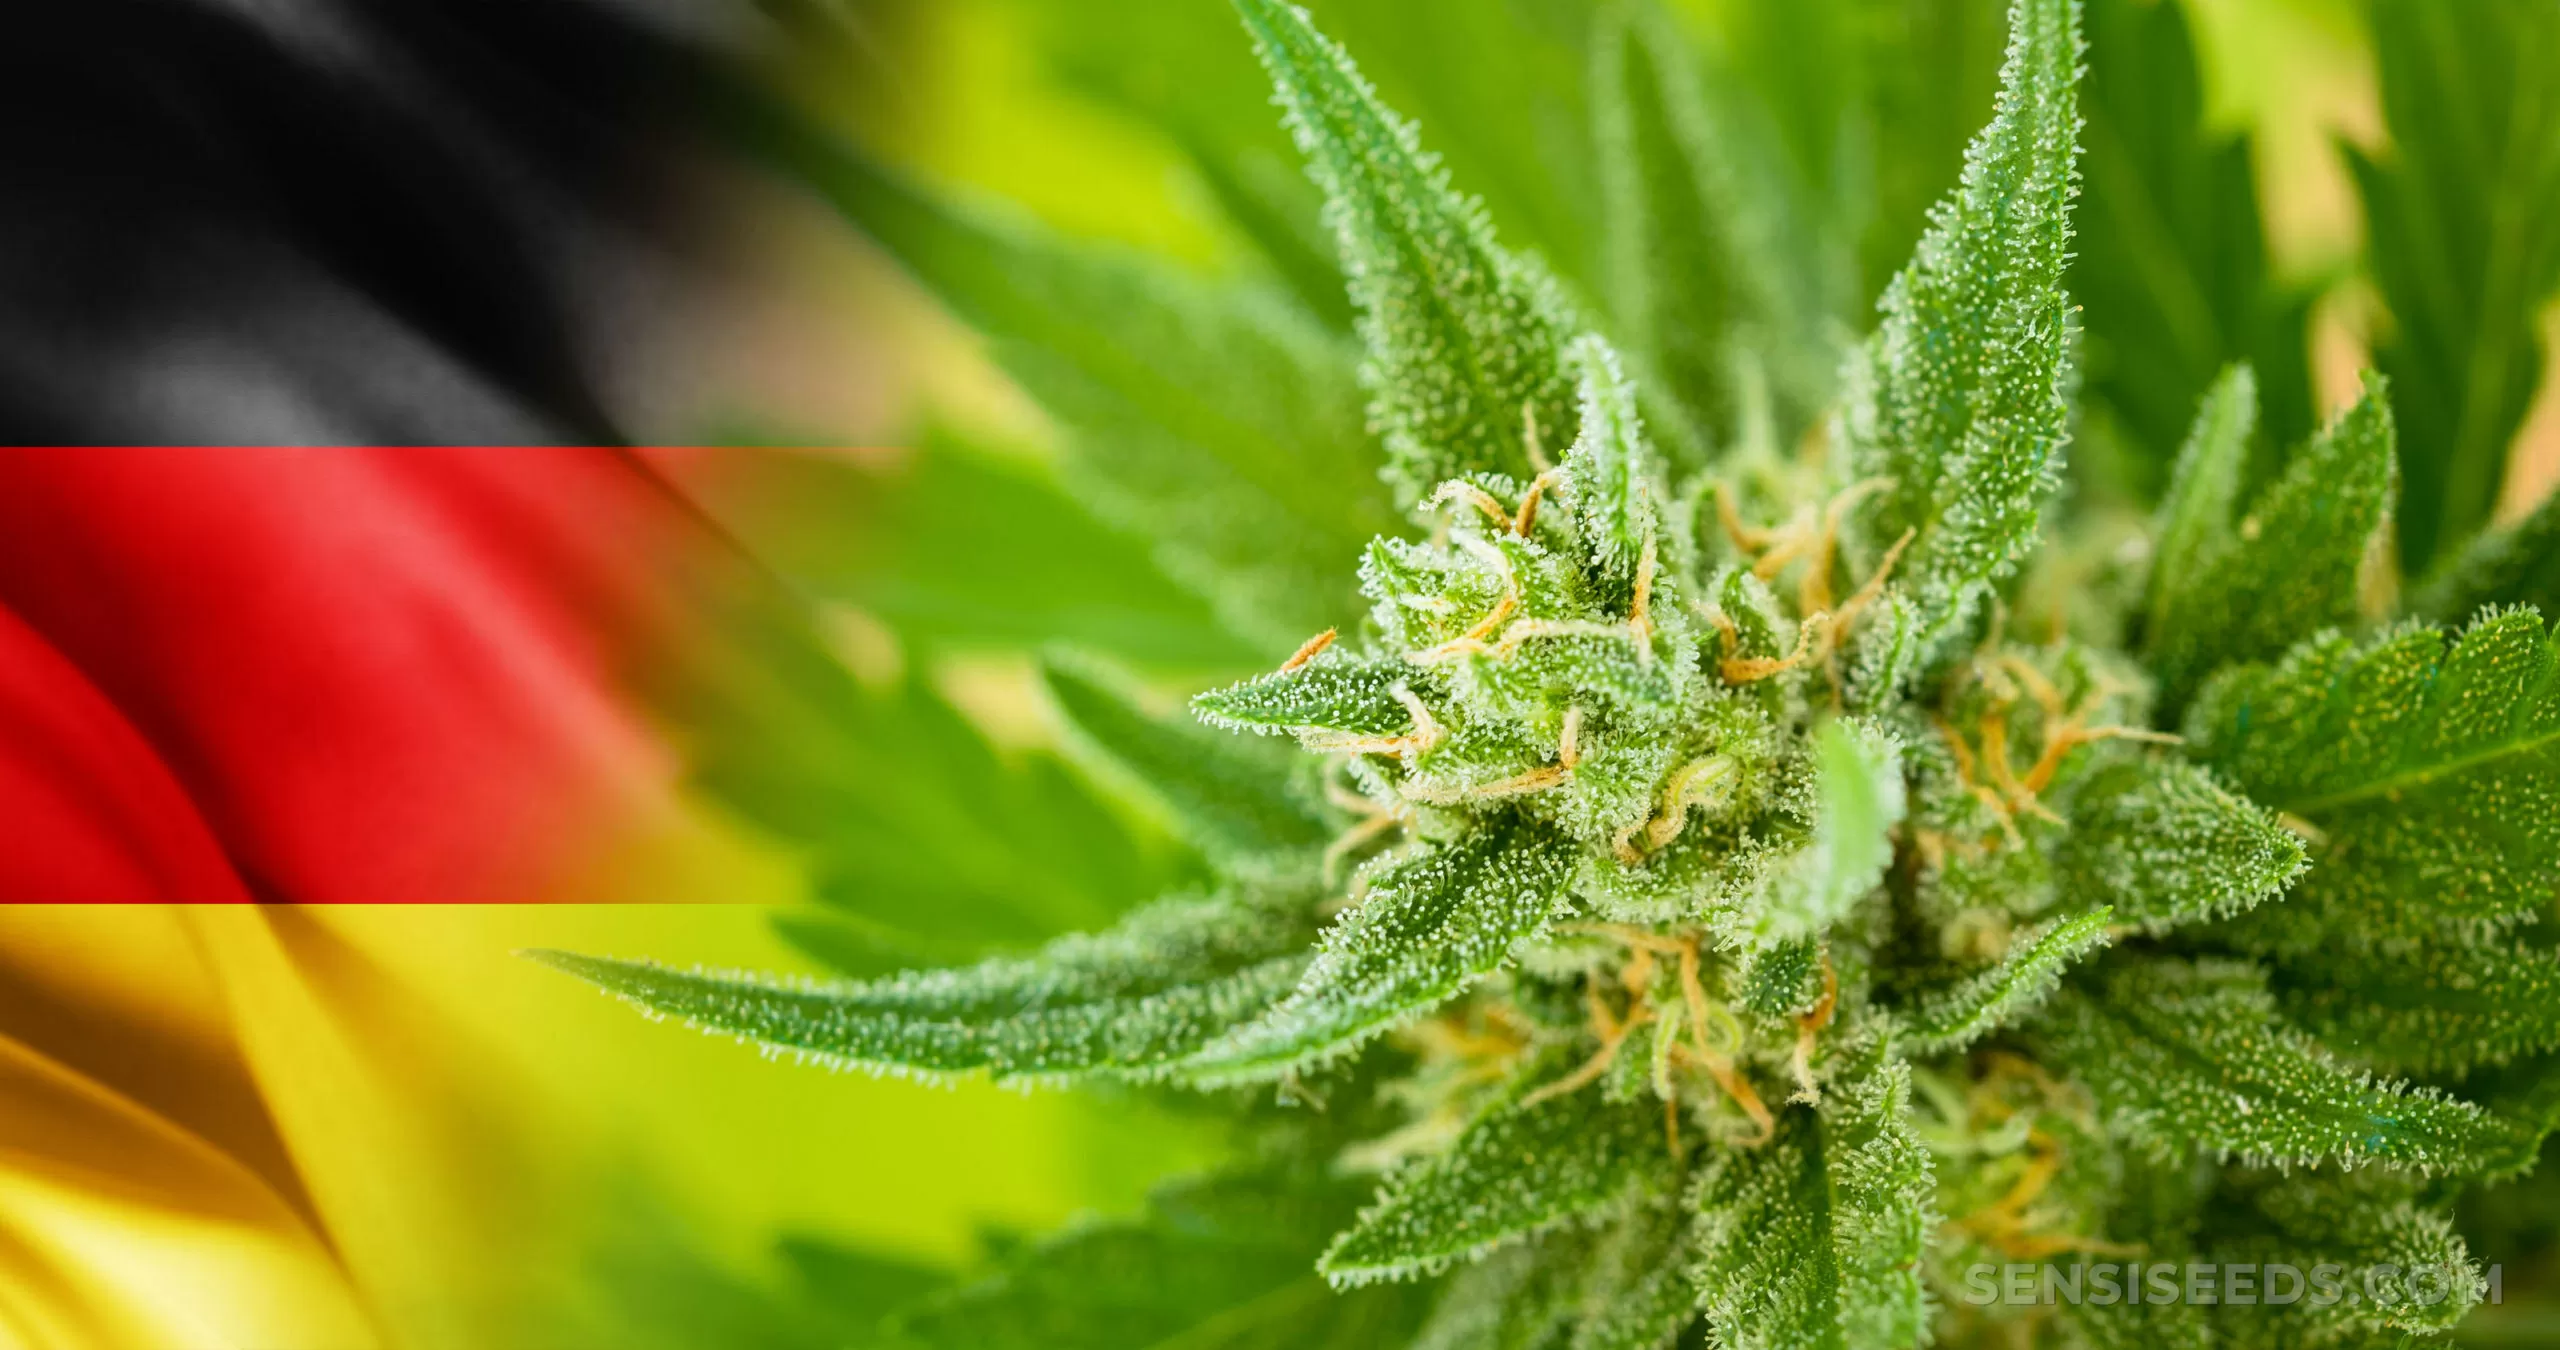 Cannabis Germany